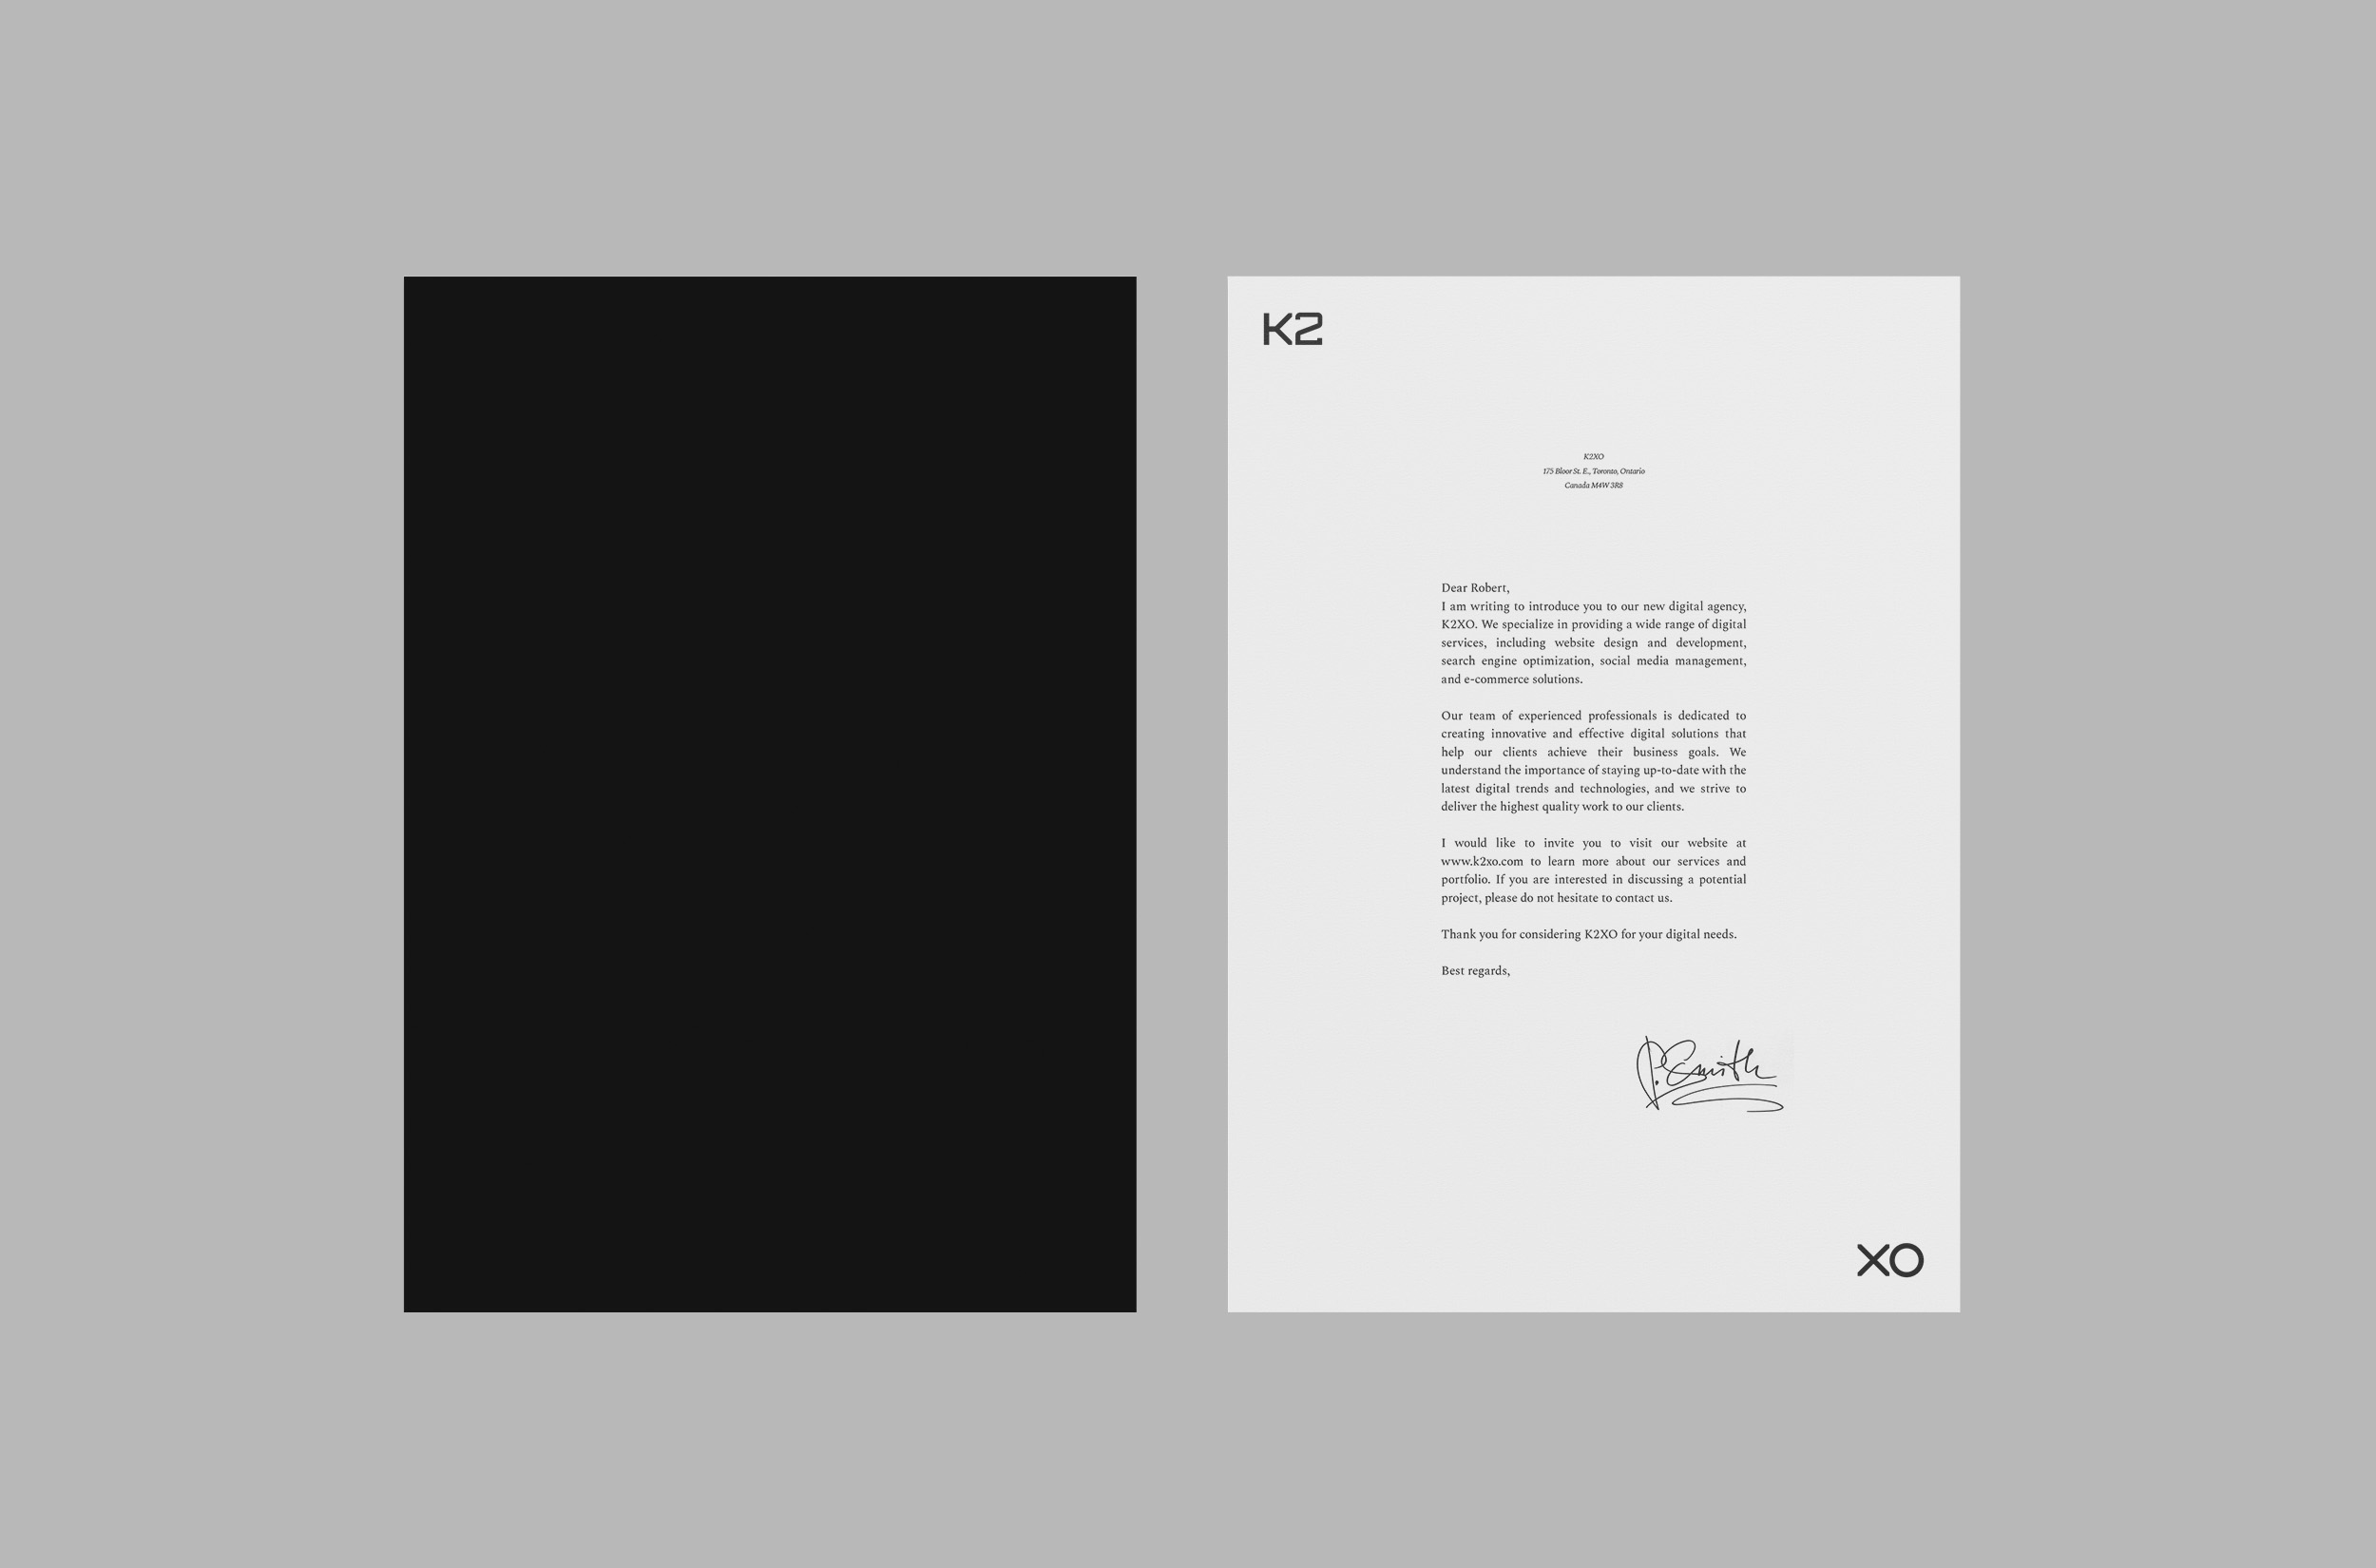 hyperposition-k2xo-print-letterhead